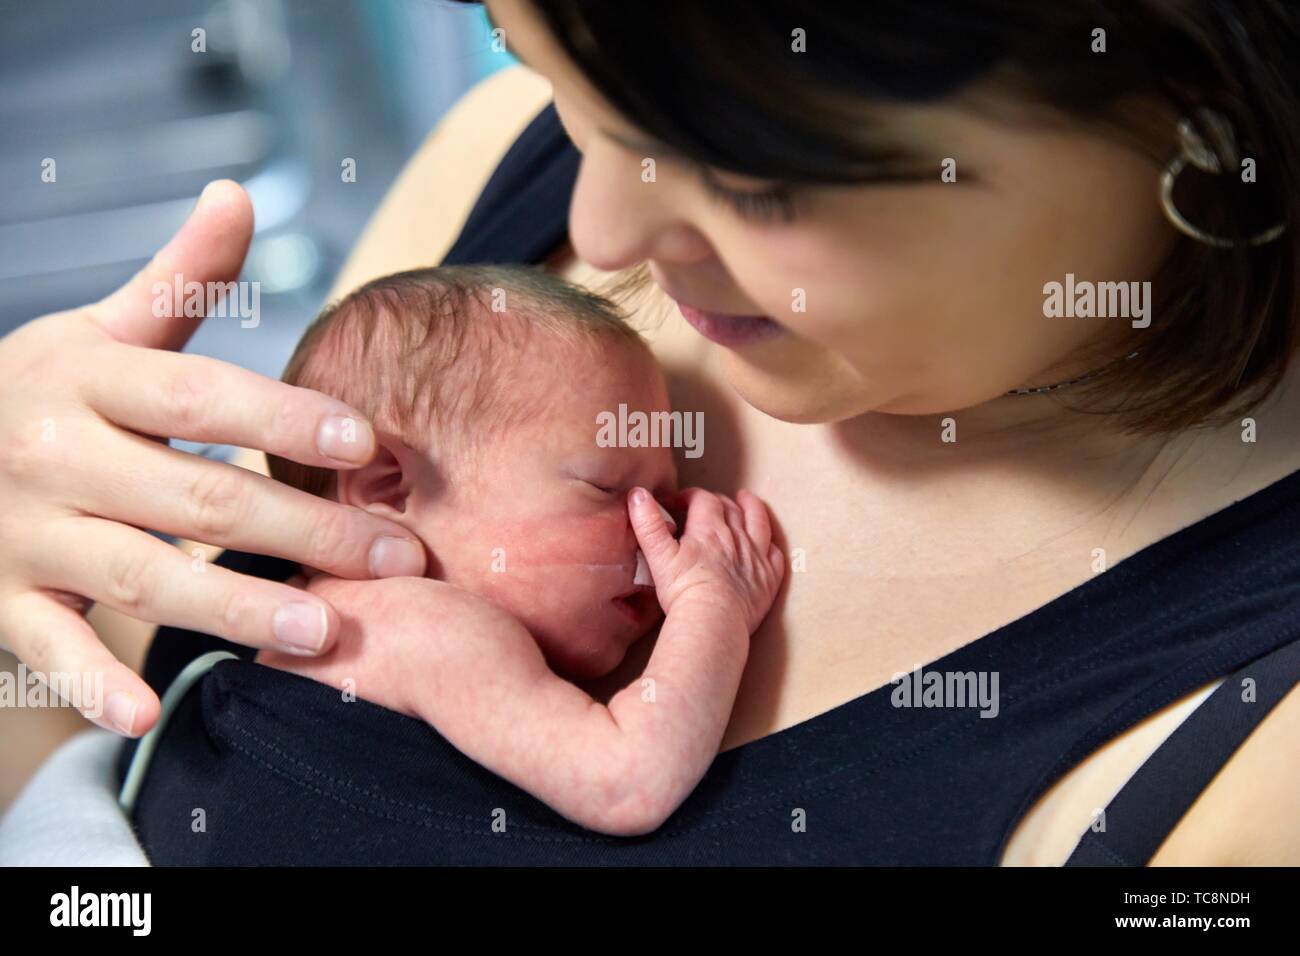 Mutter mit Baby, Mutter - kangaroo Methode, Haut-zu-Haut-Kontakt, Neonatologie Pädiatrie, Medizinische Versorgung, Neugeborene, Intensivstation, UVI, Intensivstation, Krankenhaus Stockfoto